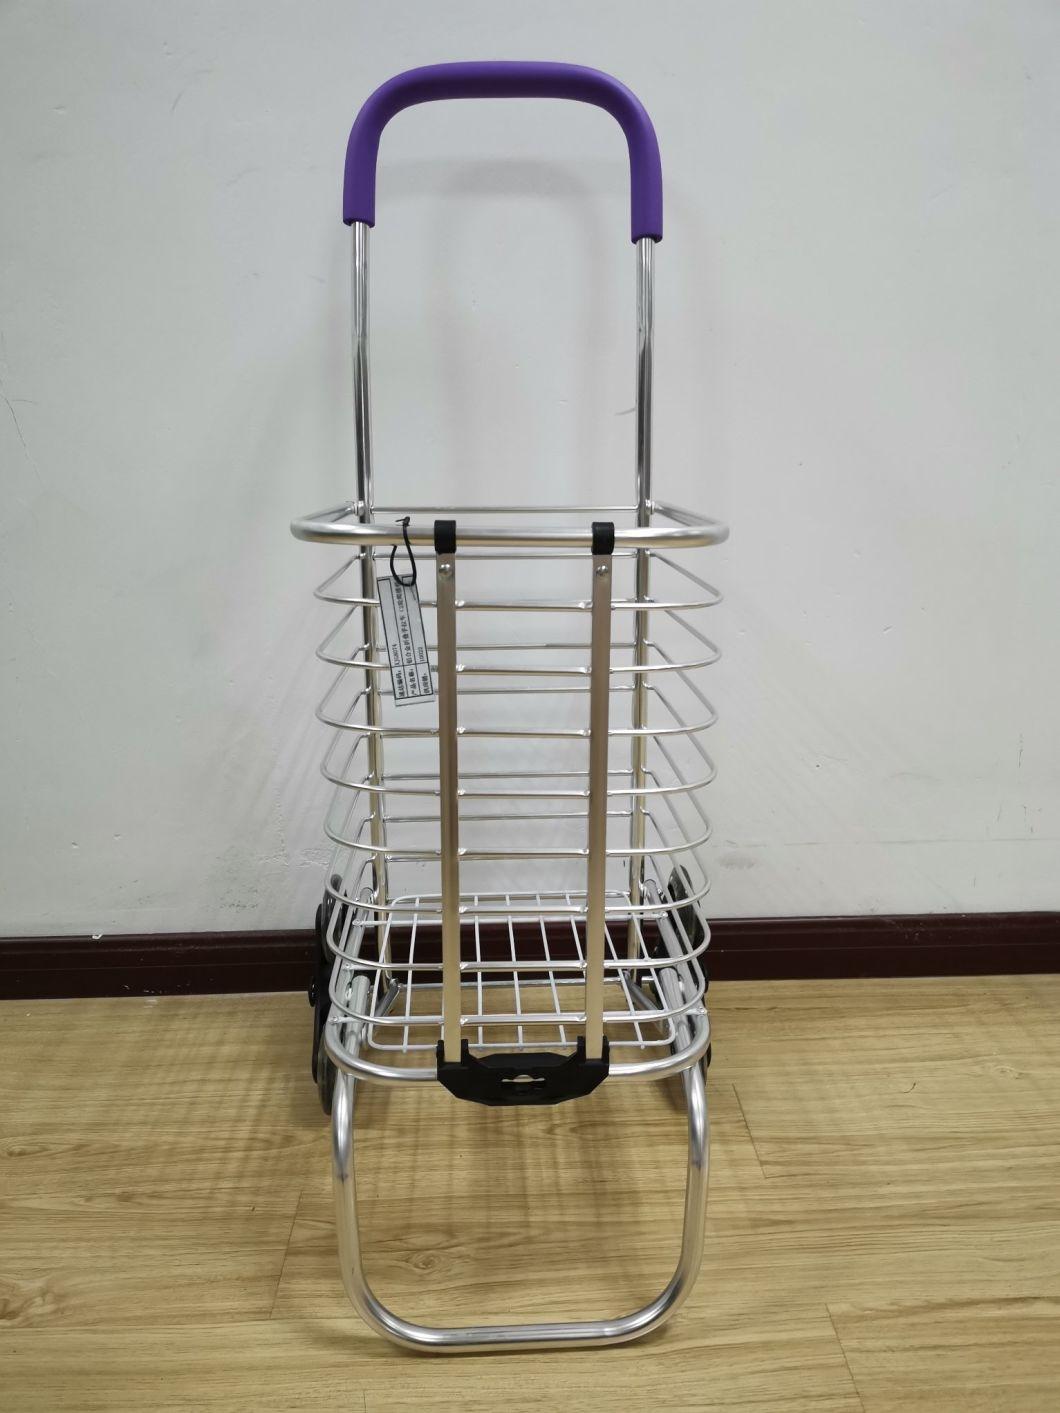 China Hot Sale Aluminum 3 Wheel Stair Climbing Cart Folding Shopping Trolleys